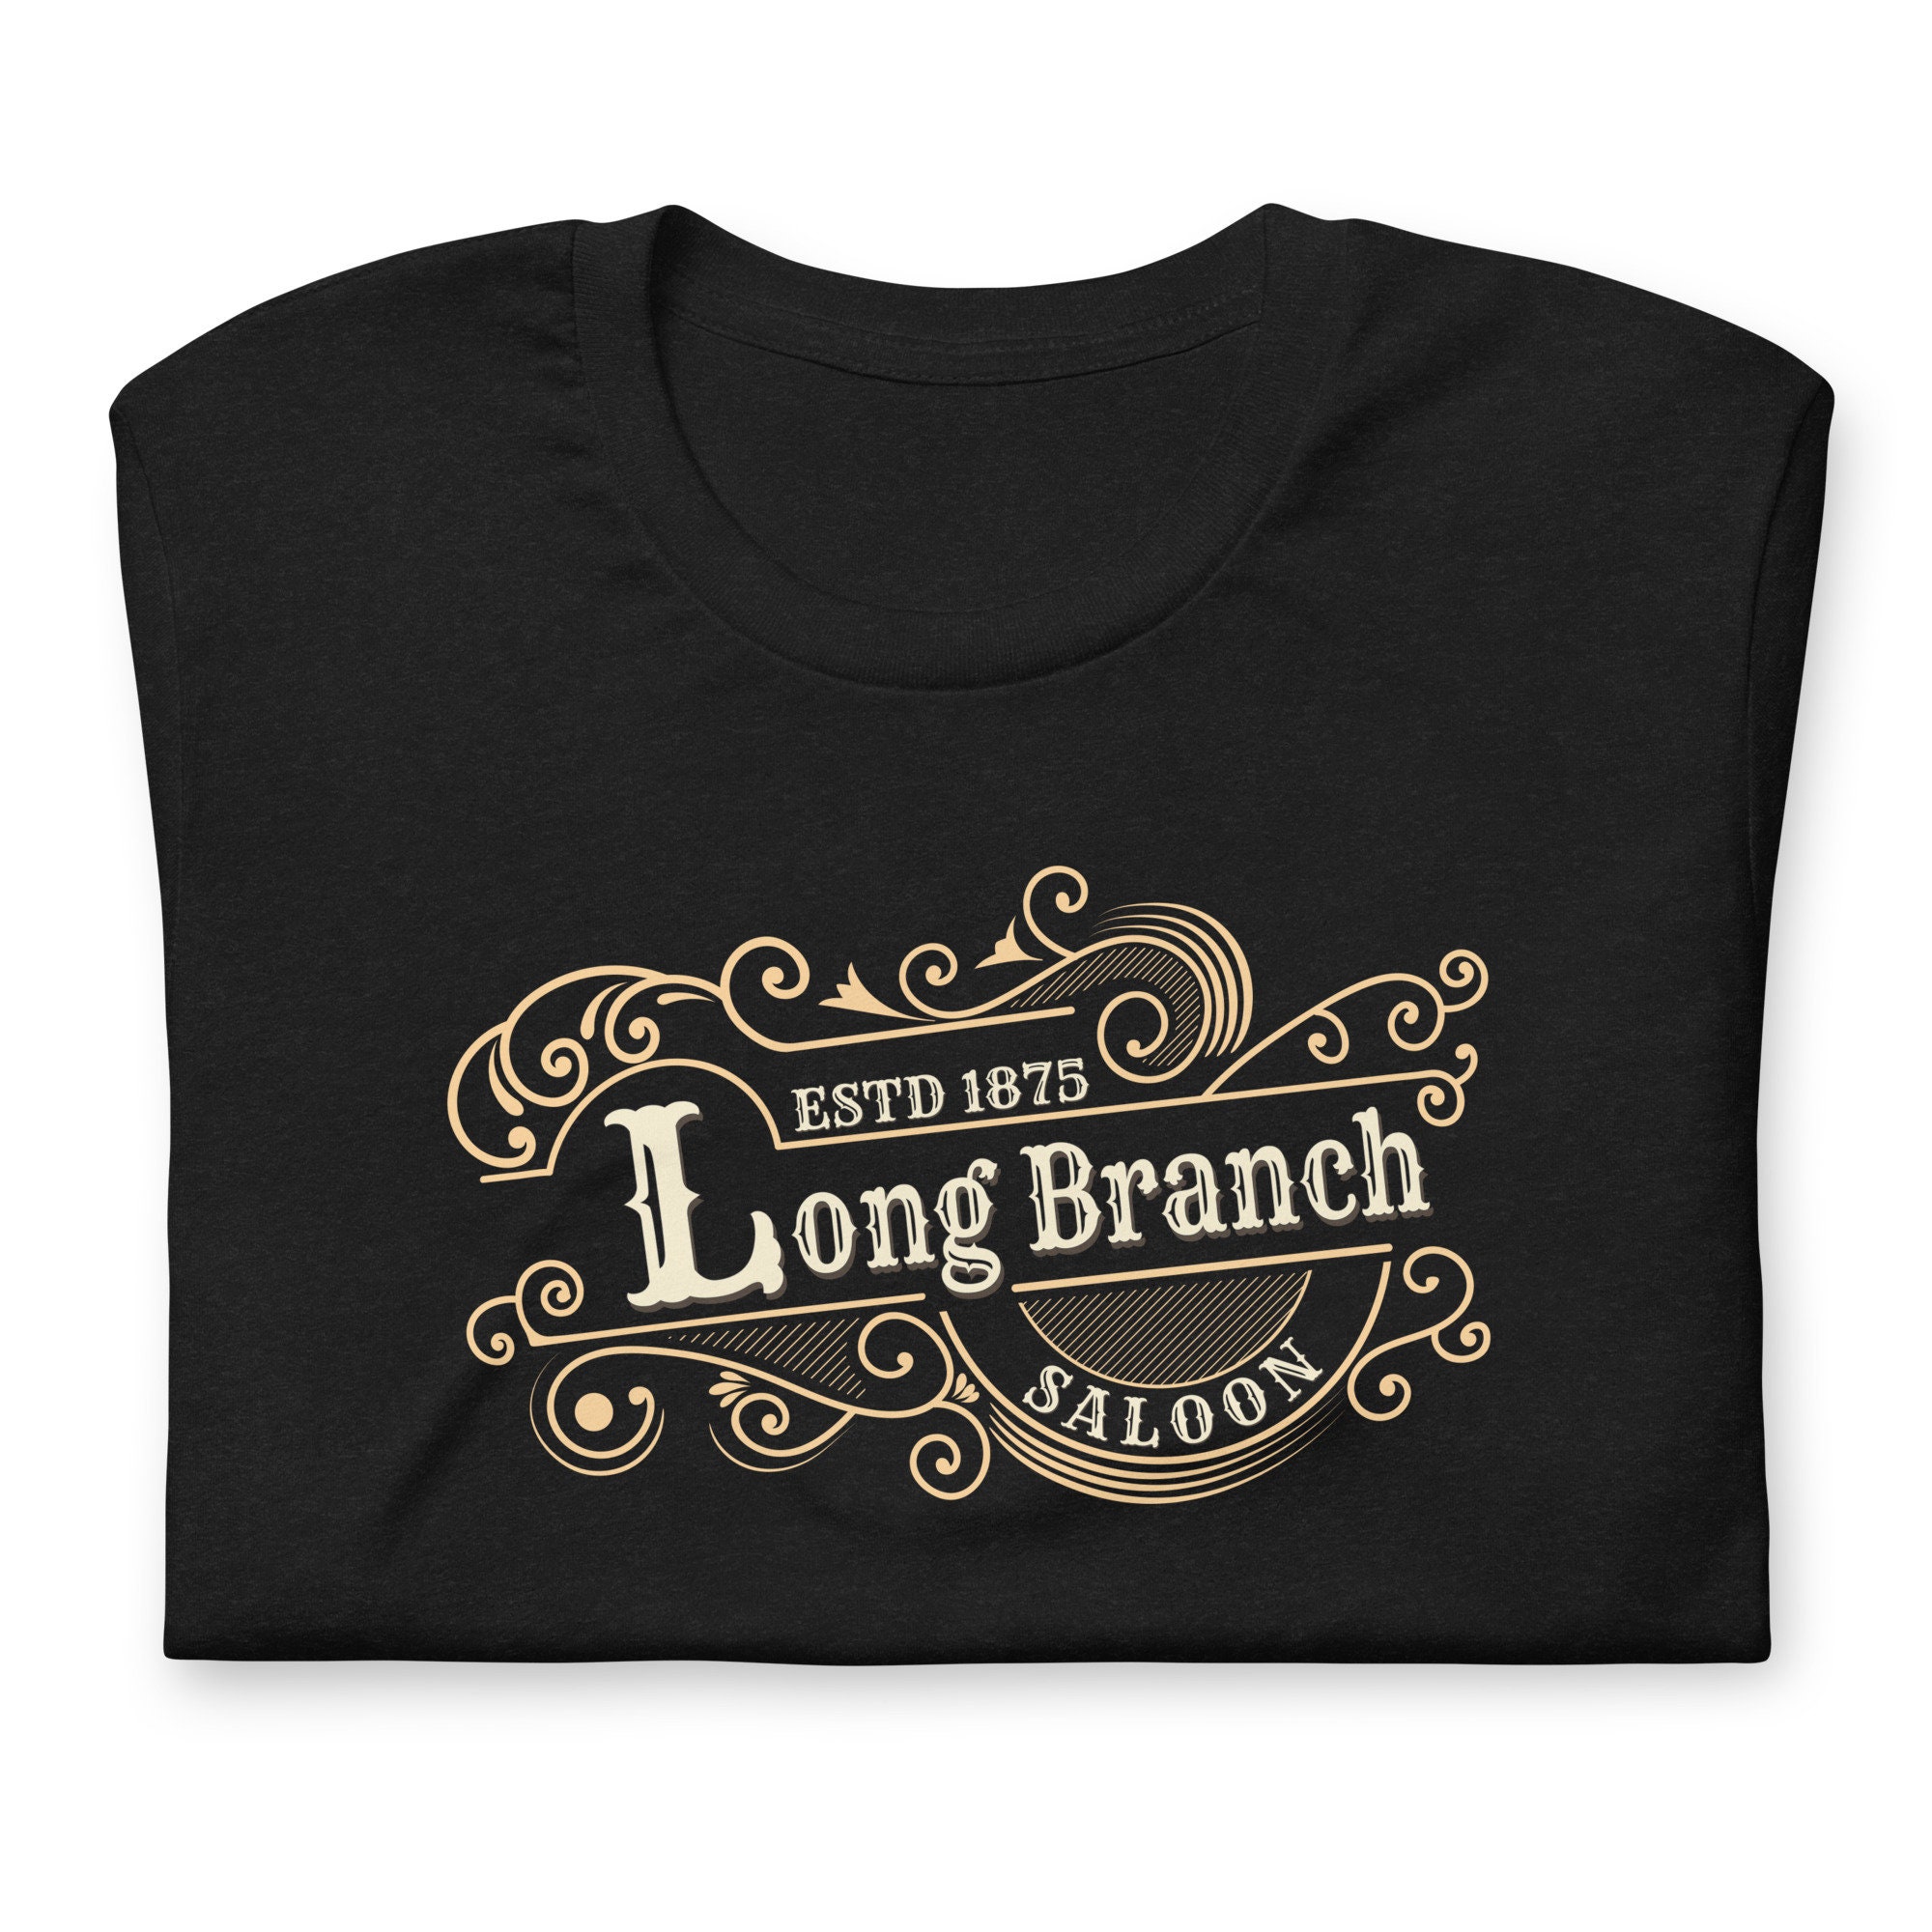 Gunsmoke Retro T-shirt Long Branch Saloon Tee Vintage Graphic Tee Classic  Western Shirt -  Canada